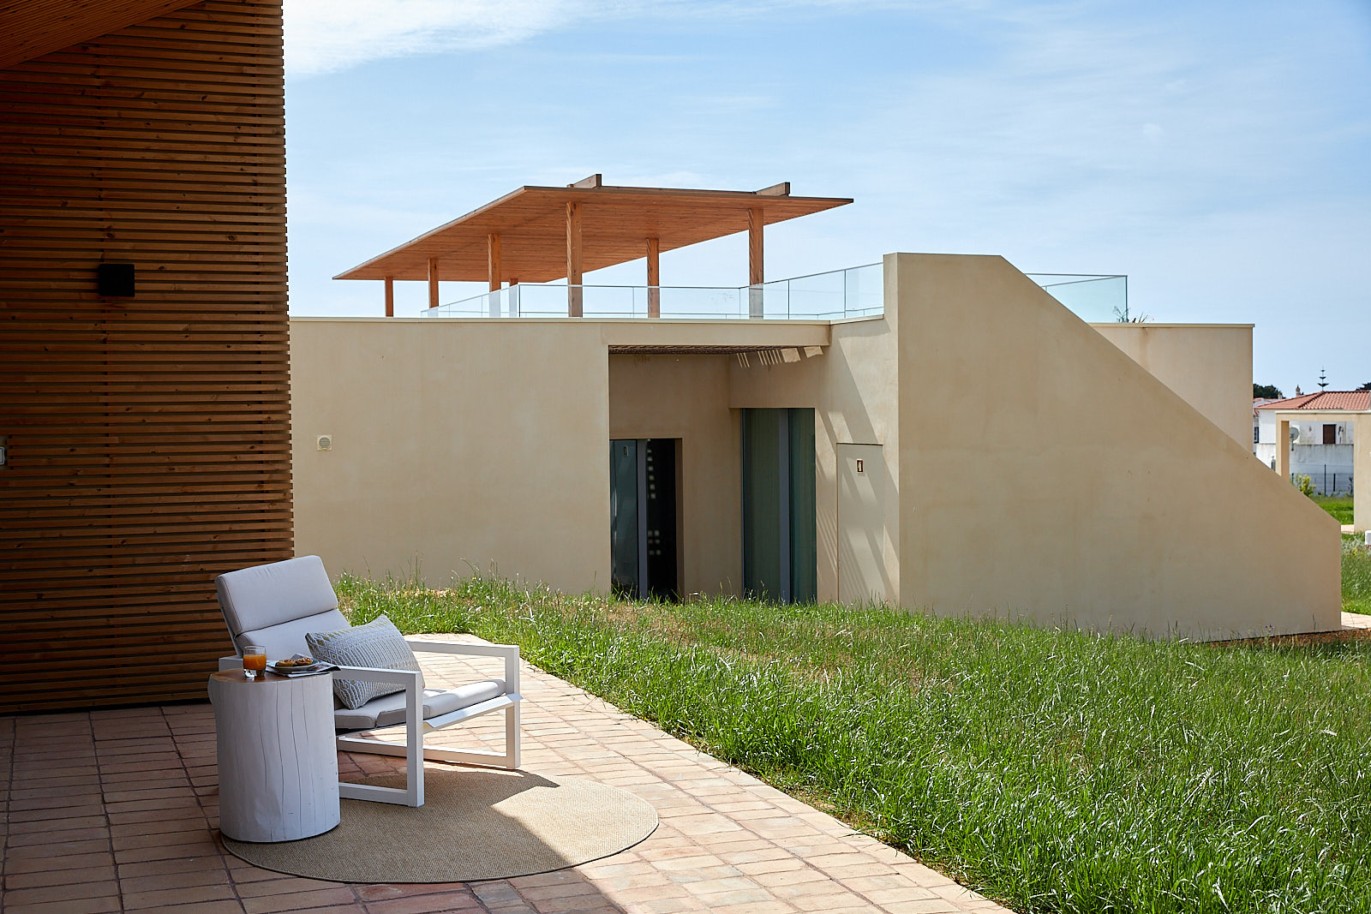 3 bedroom apartment in resort, for sale in Porches, Algarve_230743